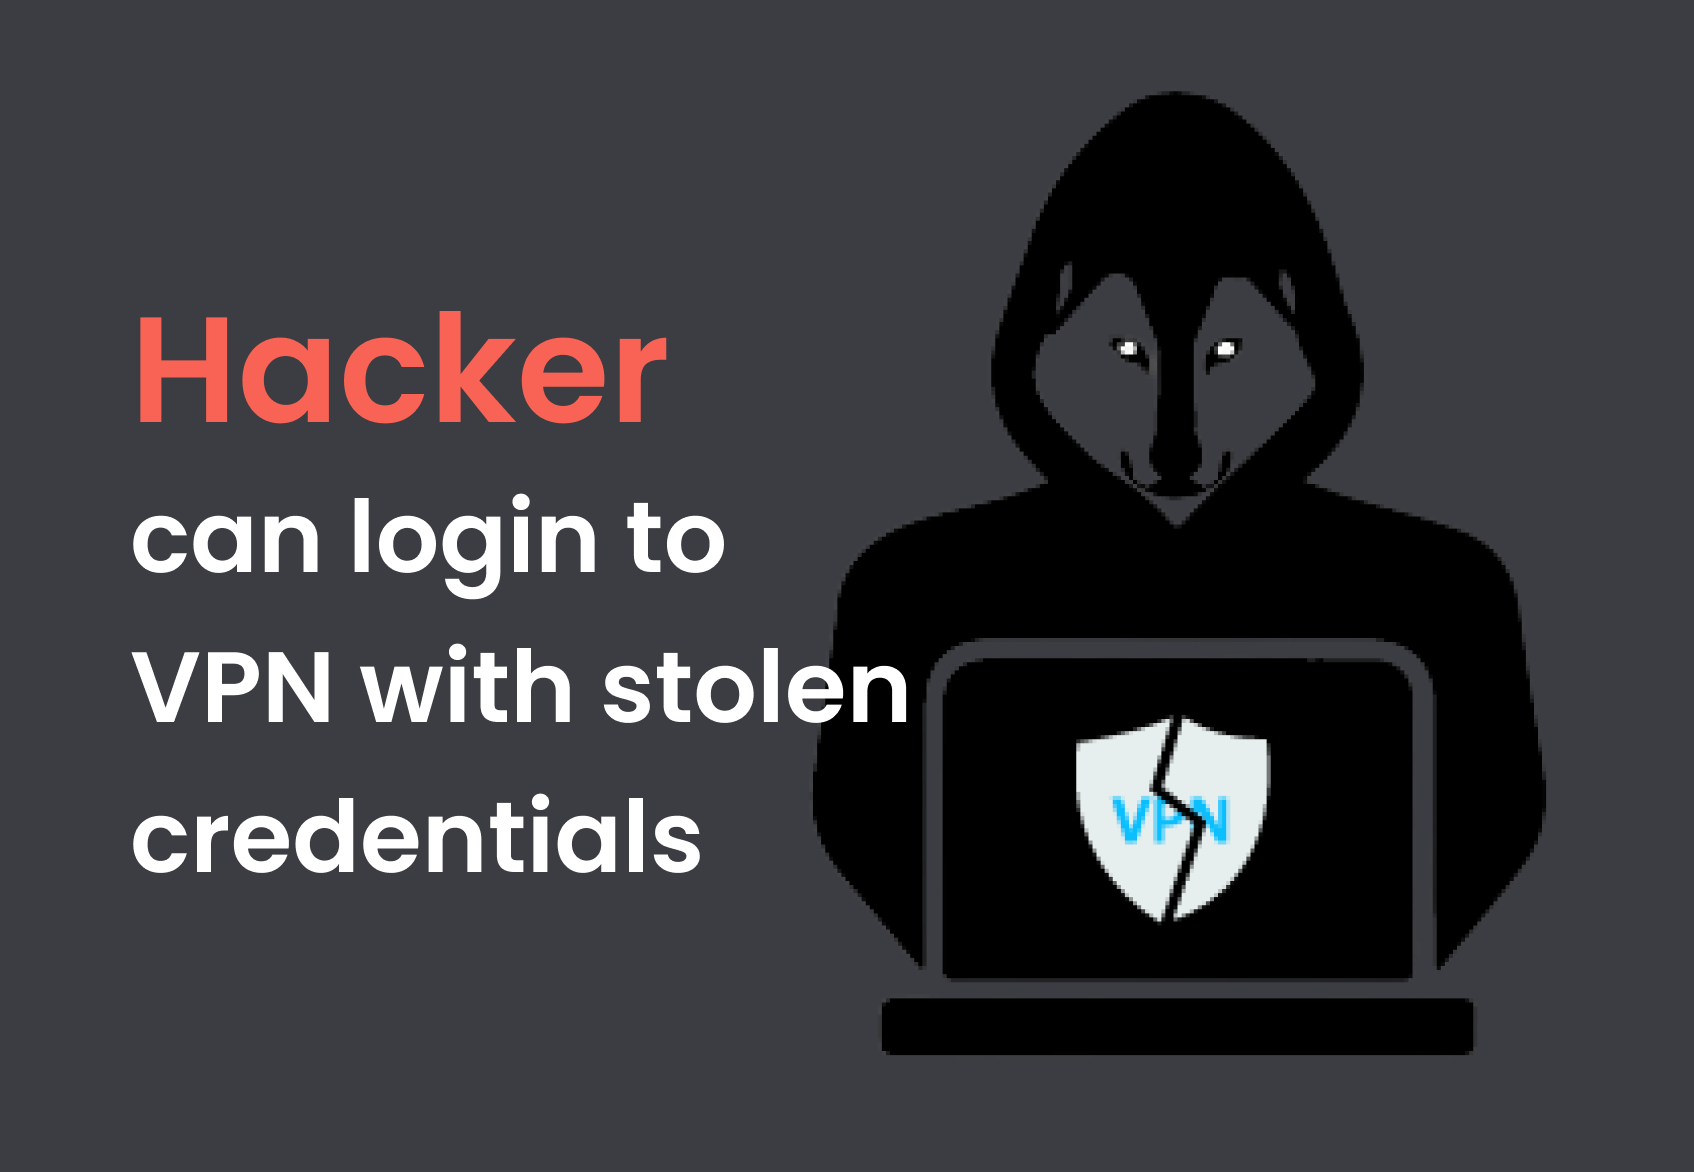 Hacker can login to VPN with stolen credentials